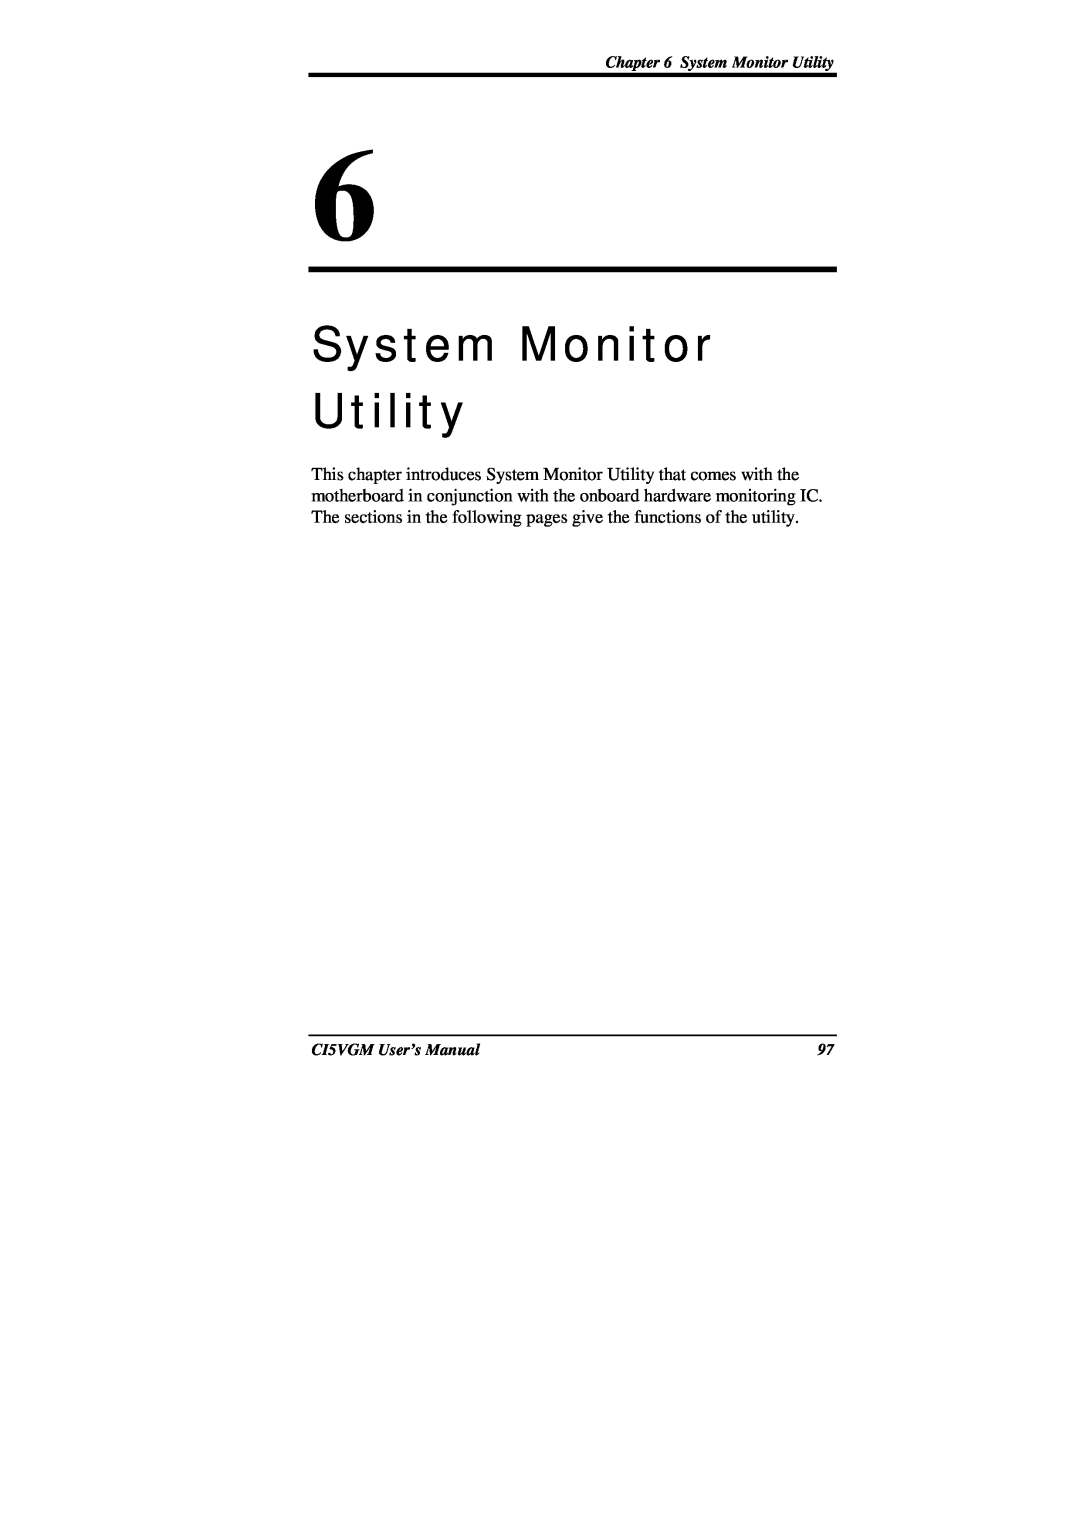 IBM CI5VGM Series user manual System Monitor Utility, CI5VGM User’s Manual 